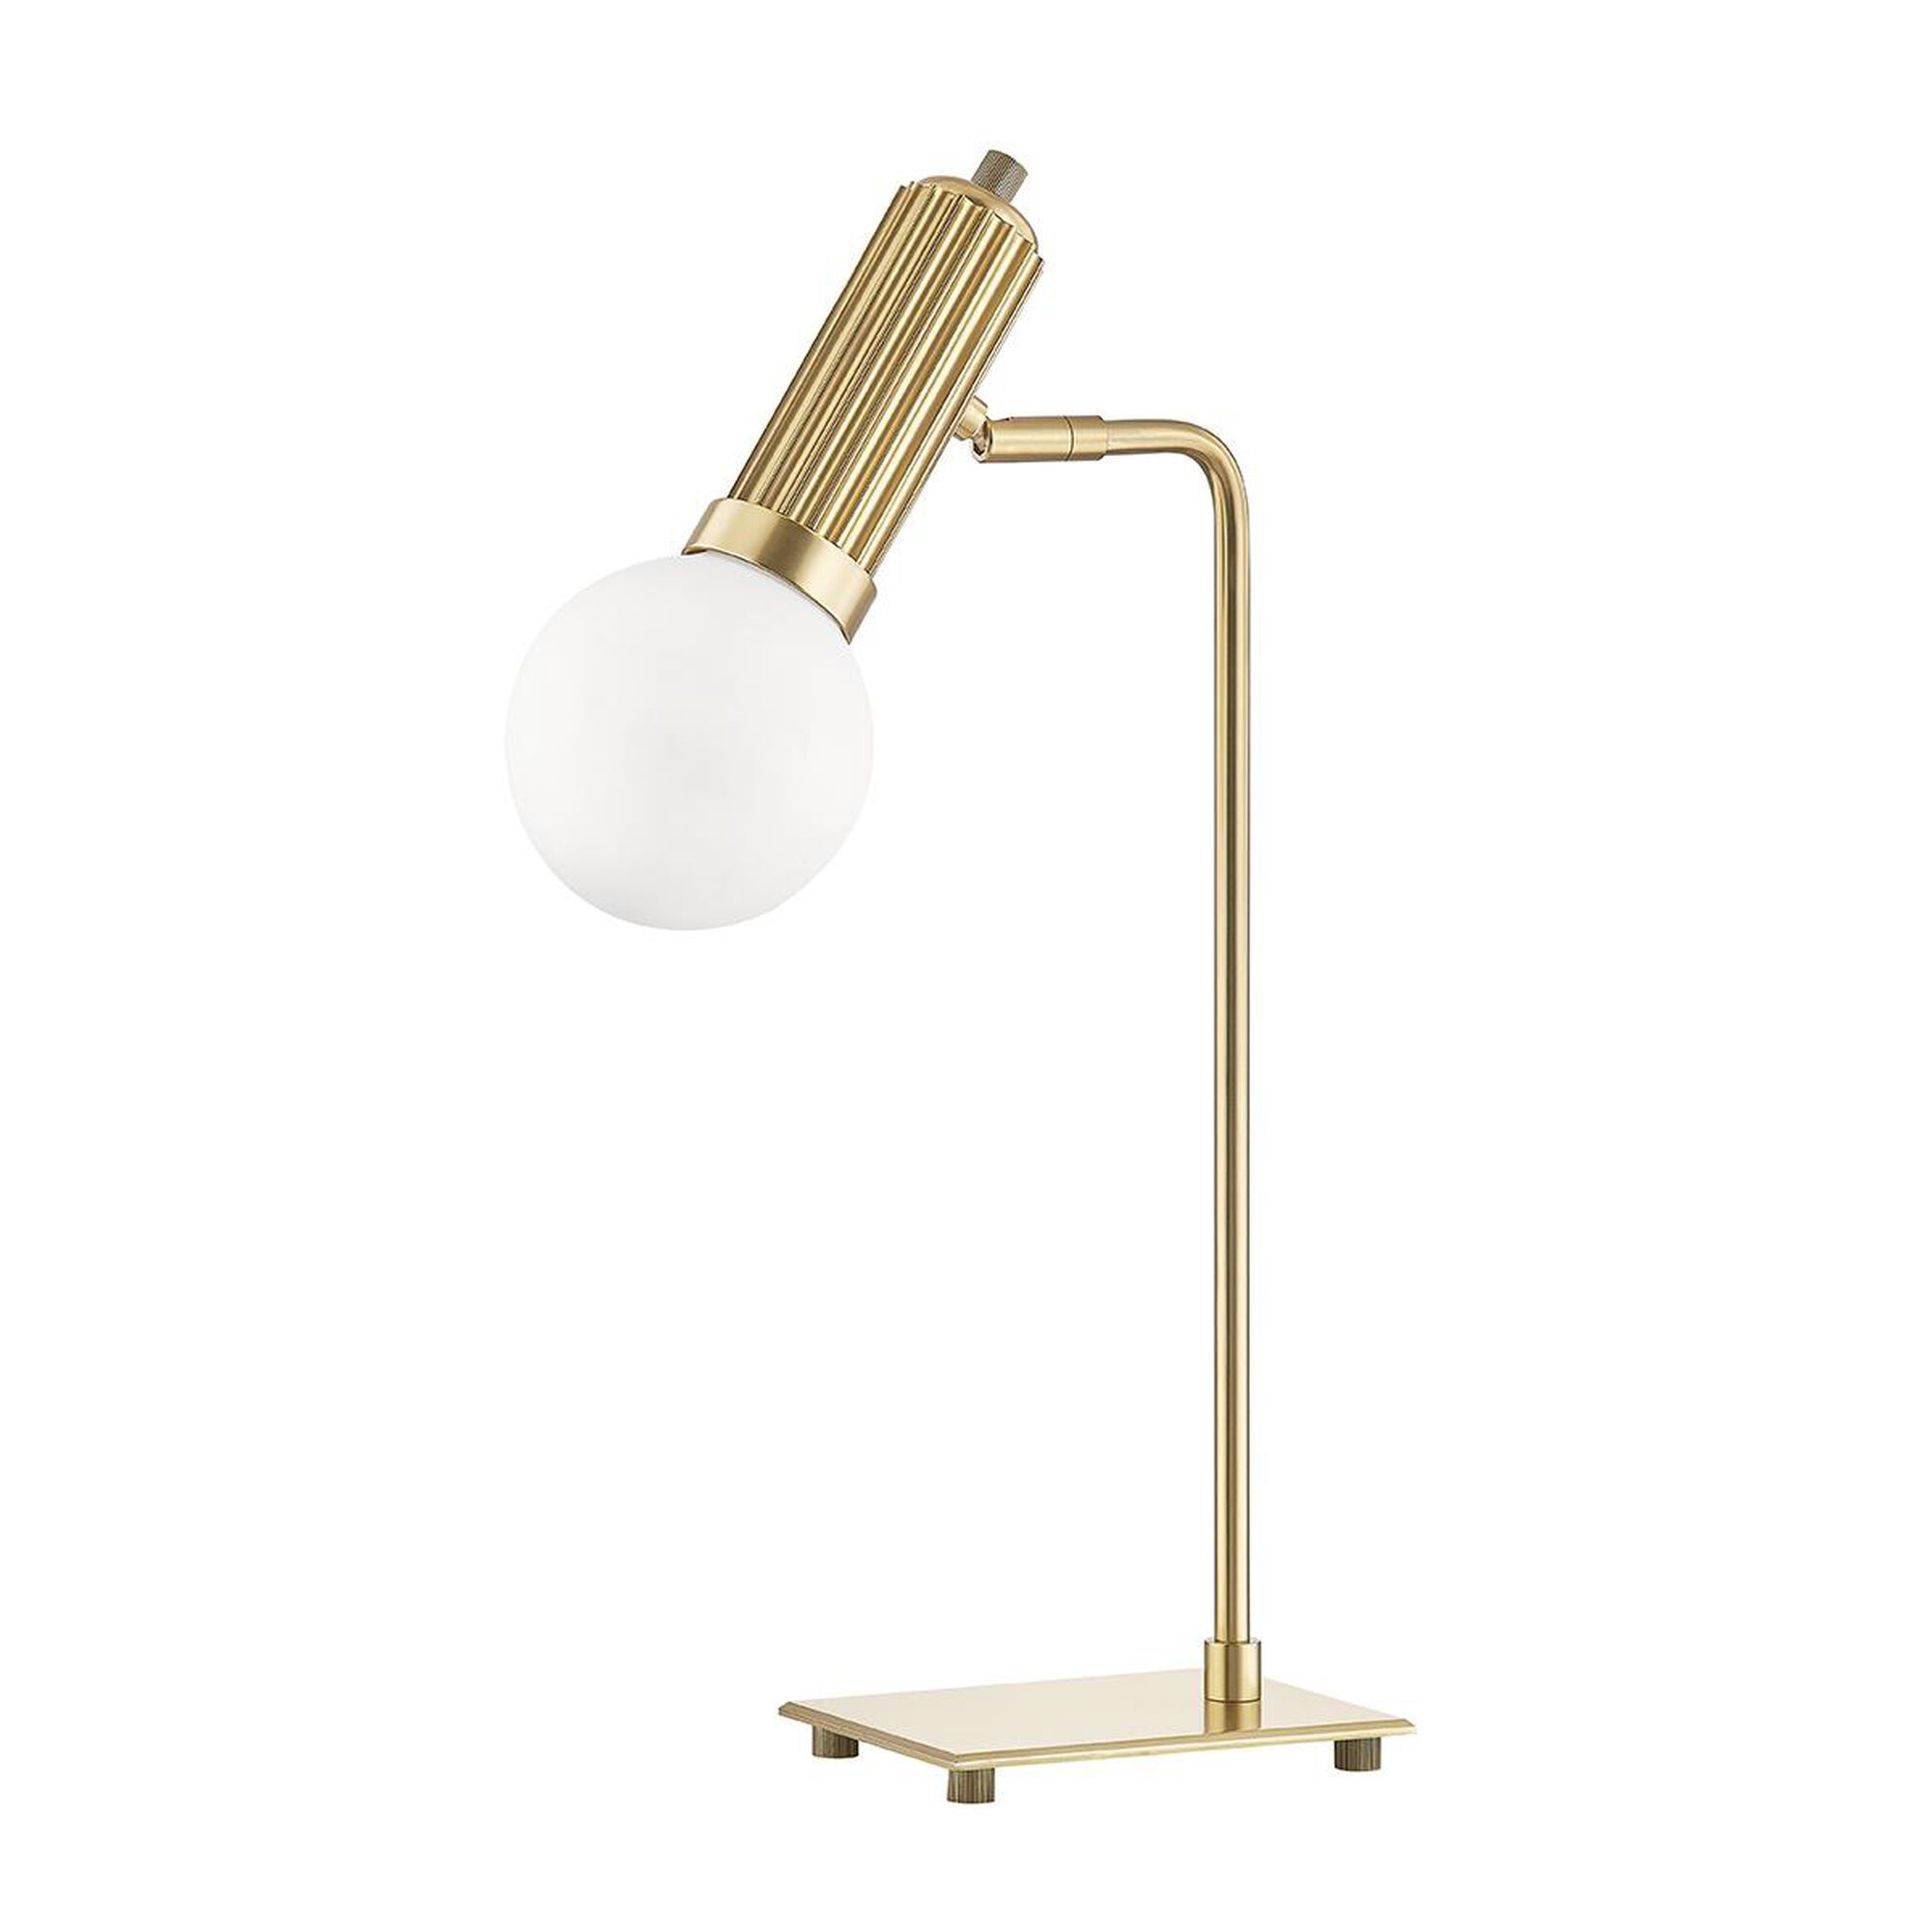 Reade 21 Inch Table Lamp by Hudson Valley Lighting | Capitol Lighting 1800lighting.com